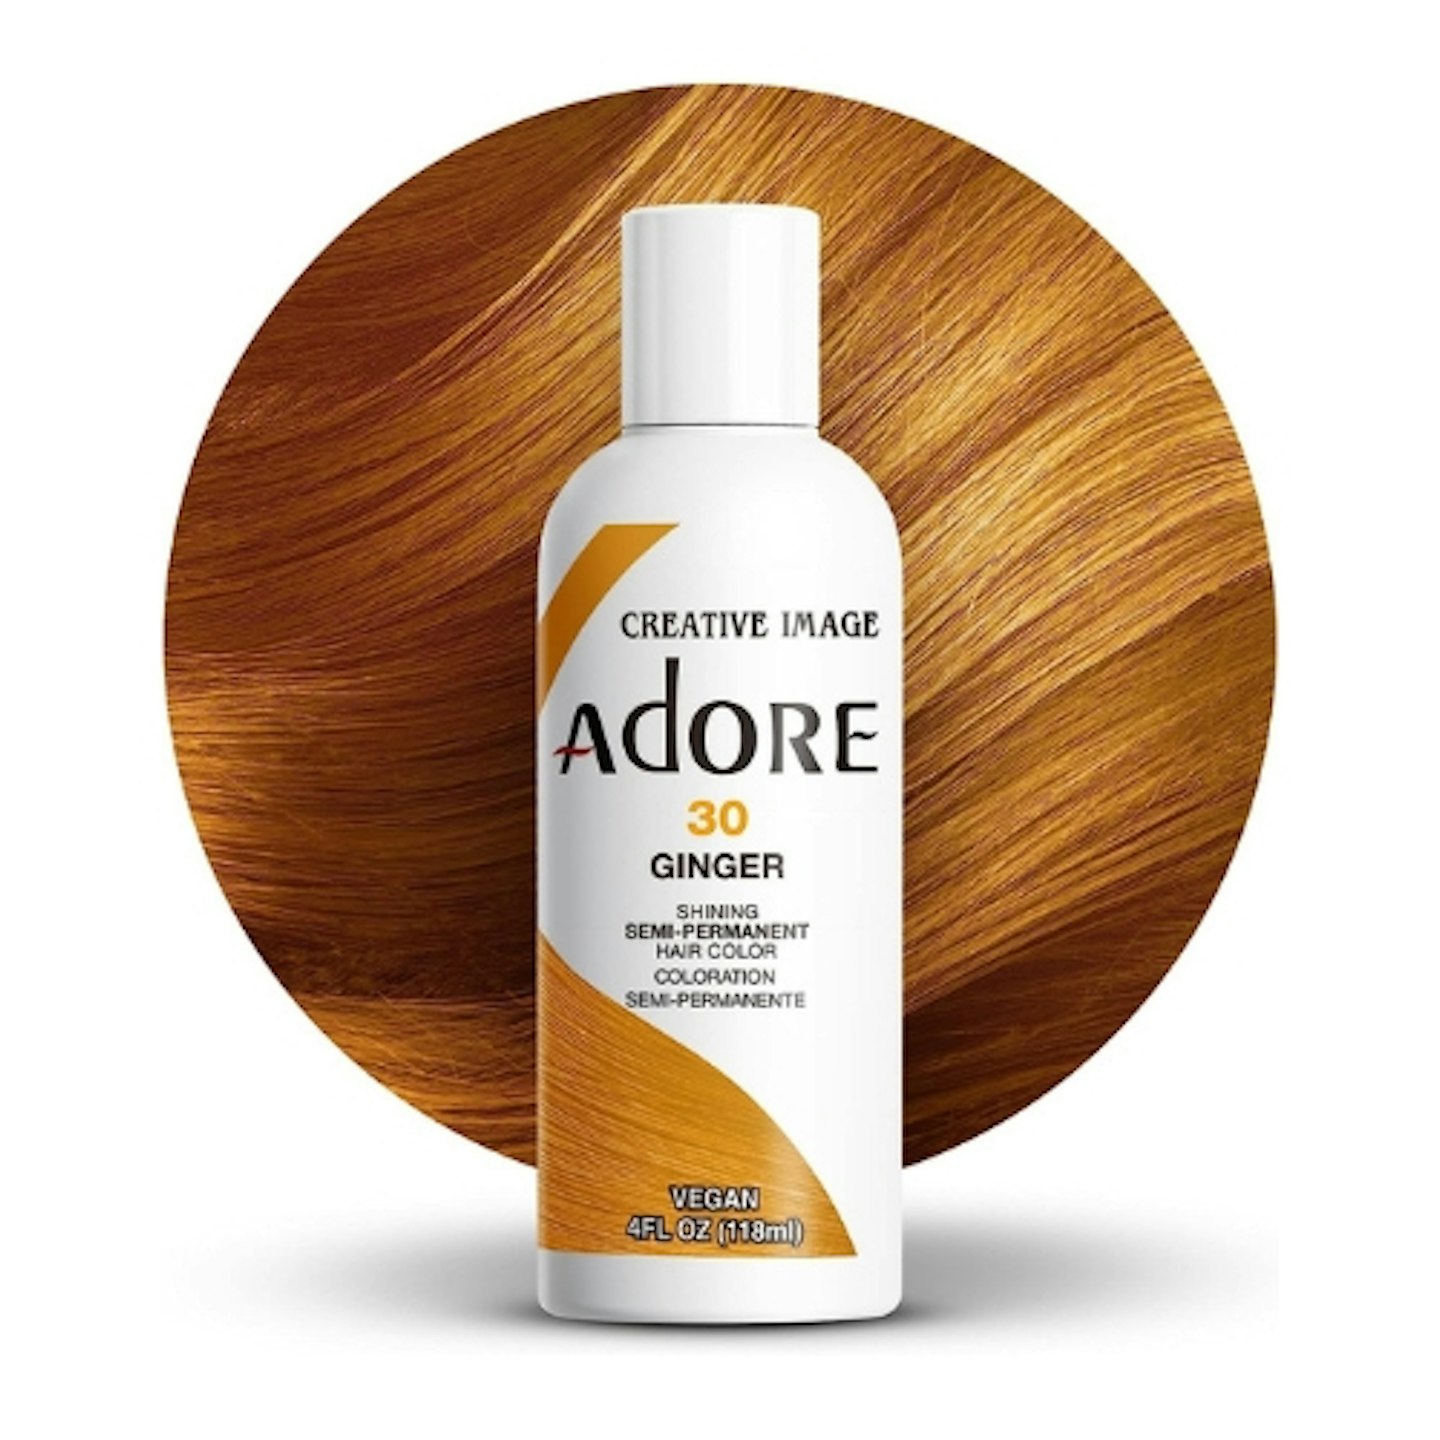 Adore Shining, Semi Permanent Hair Colour, 30 Ginger